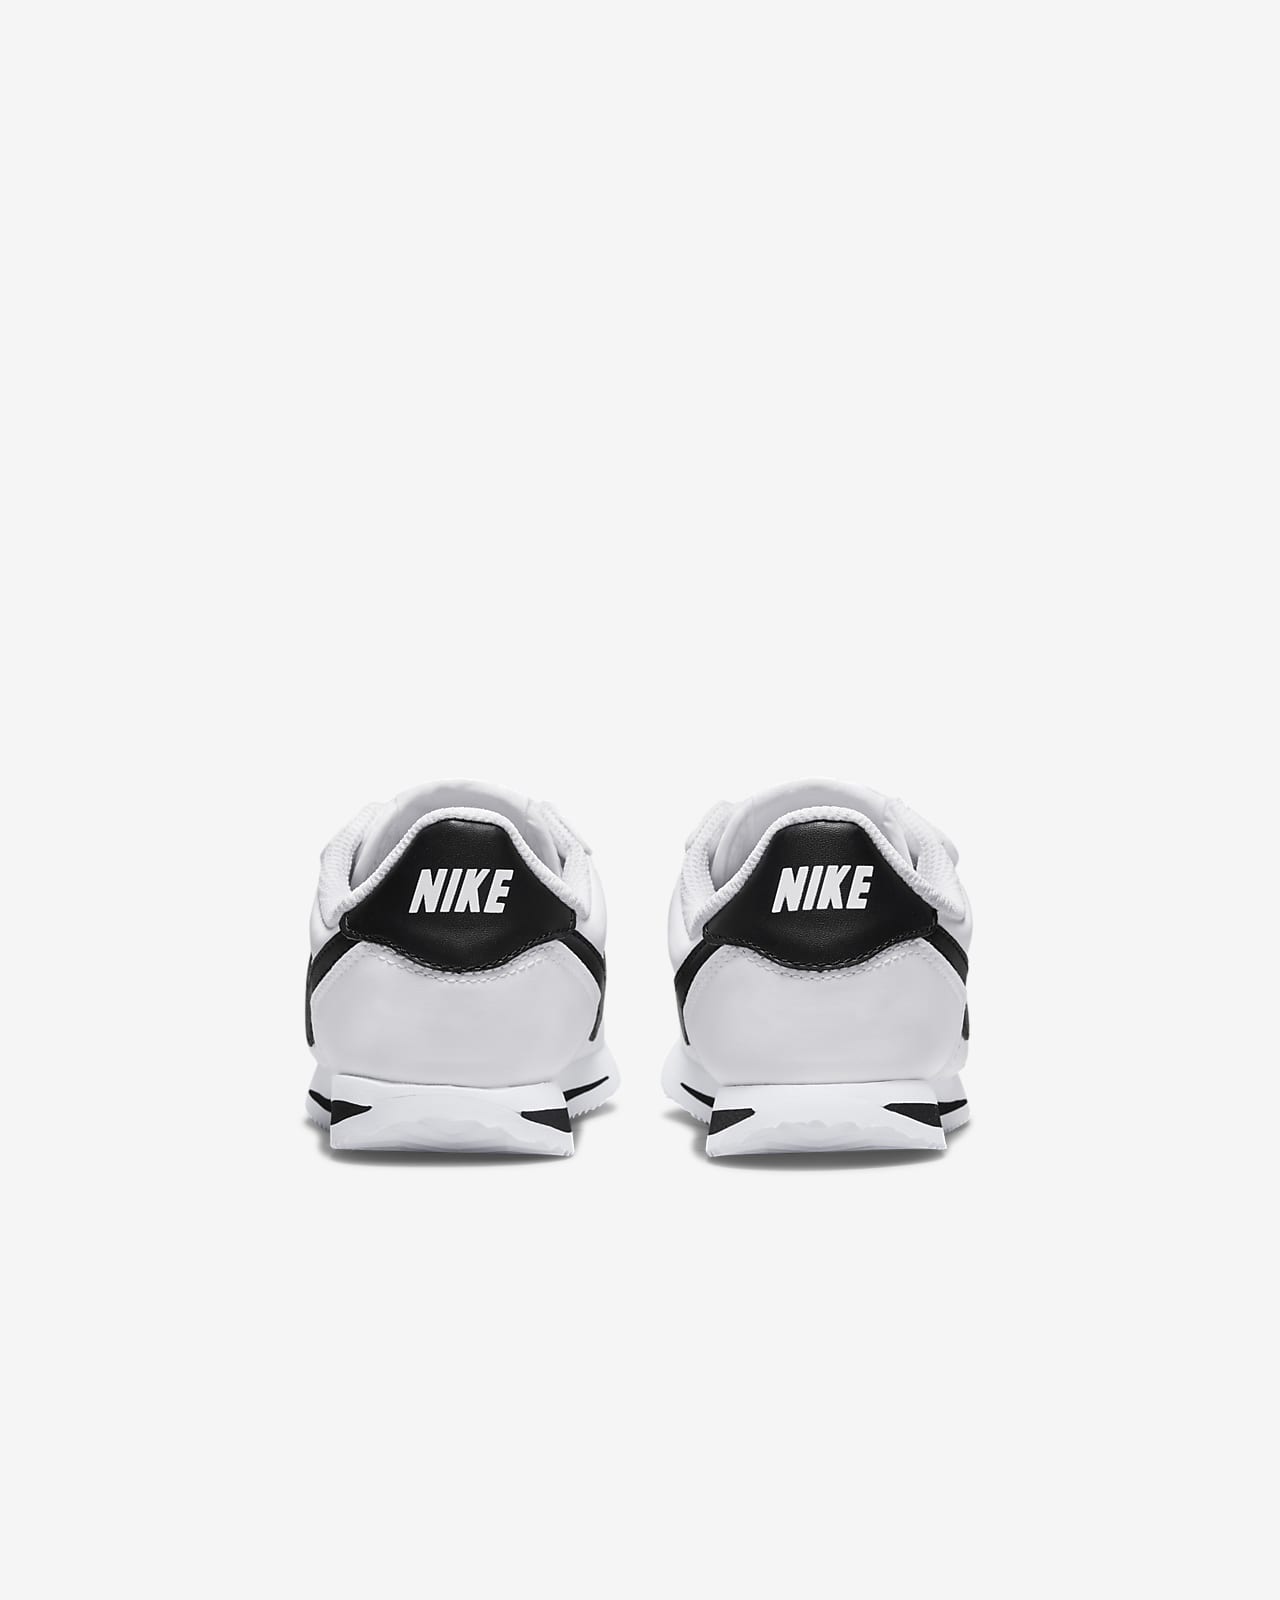 Nike Cortez Basic White/Black Grade School Boys' Shoe